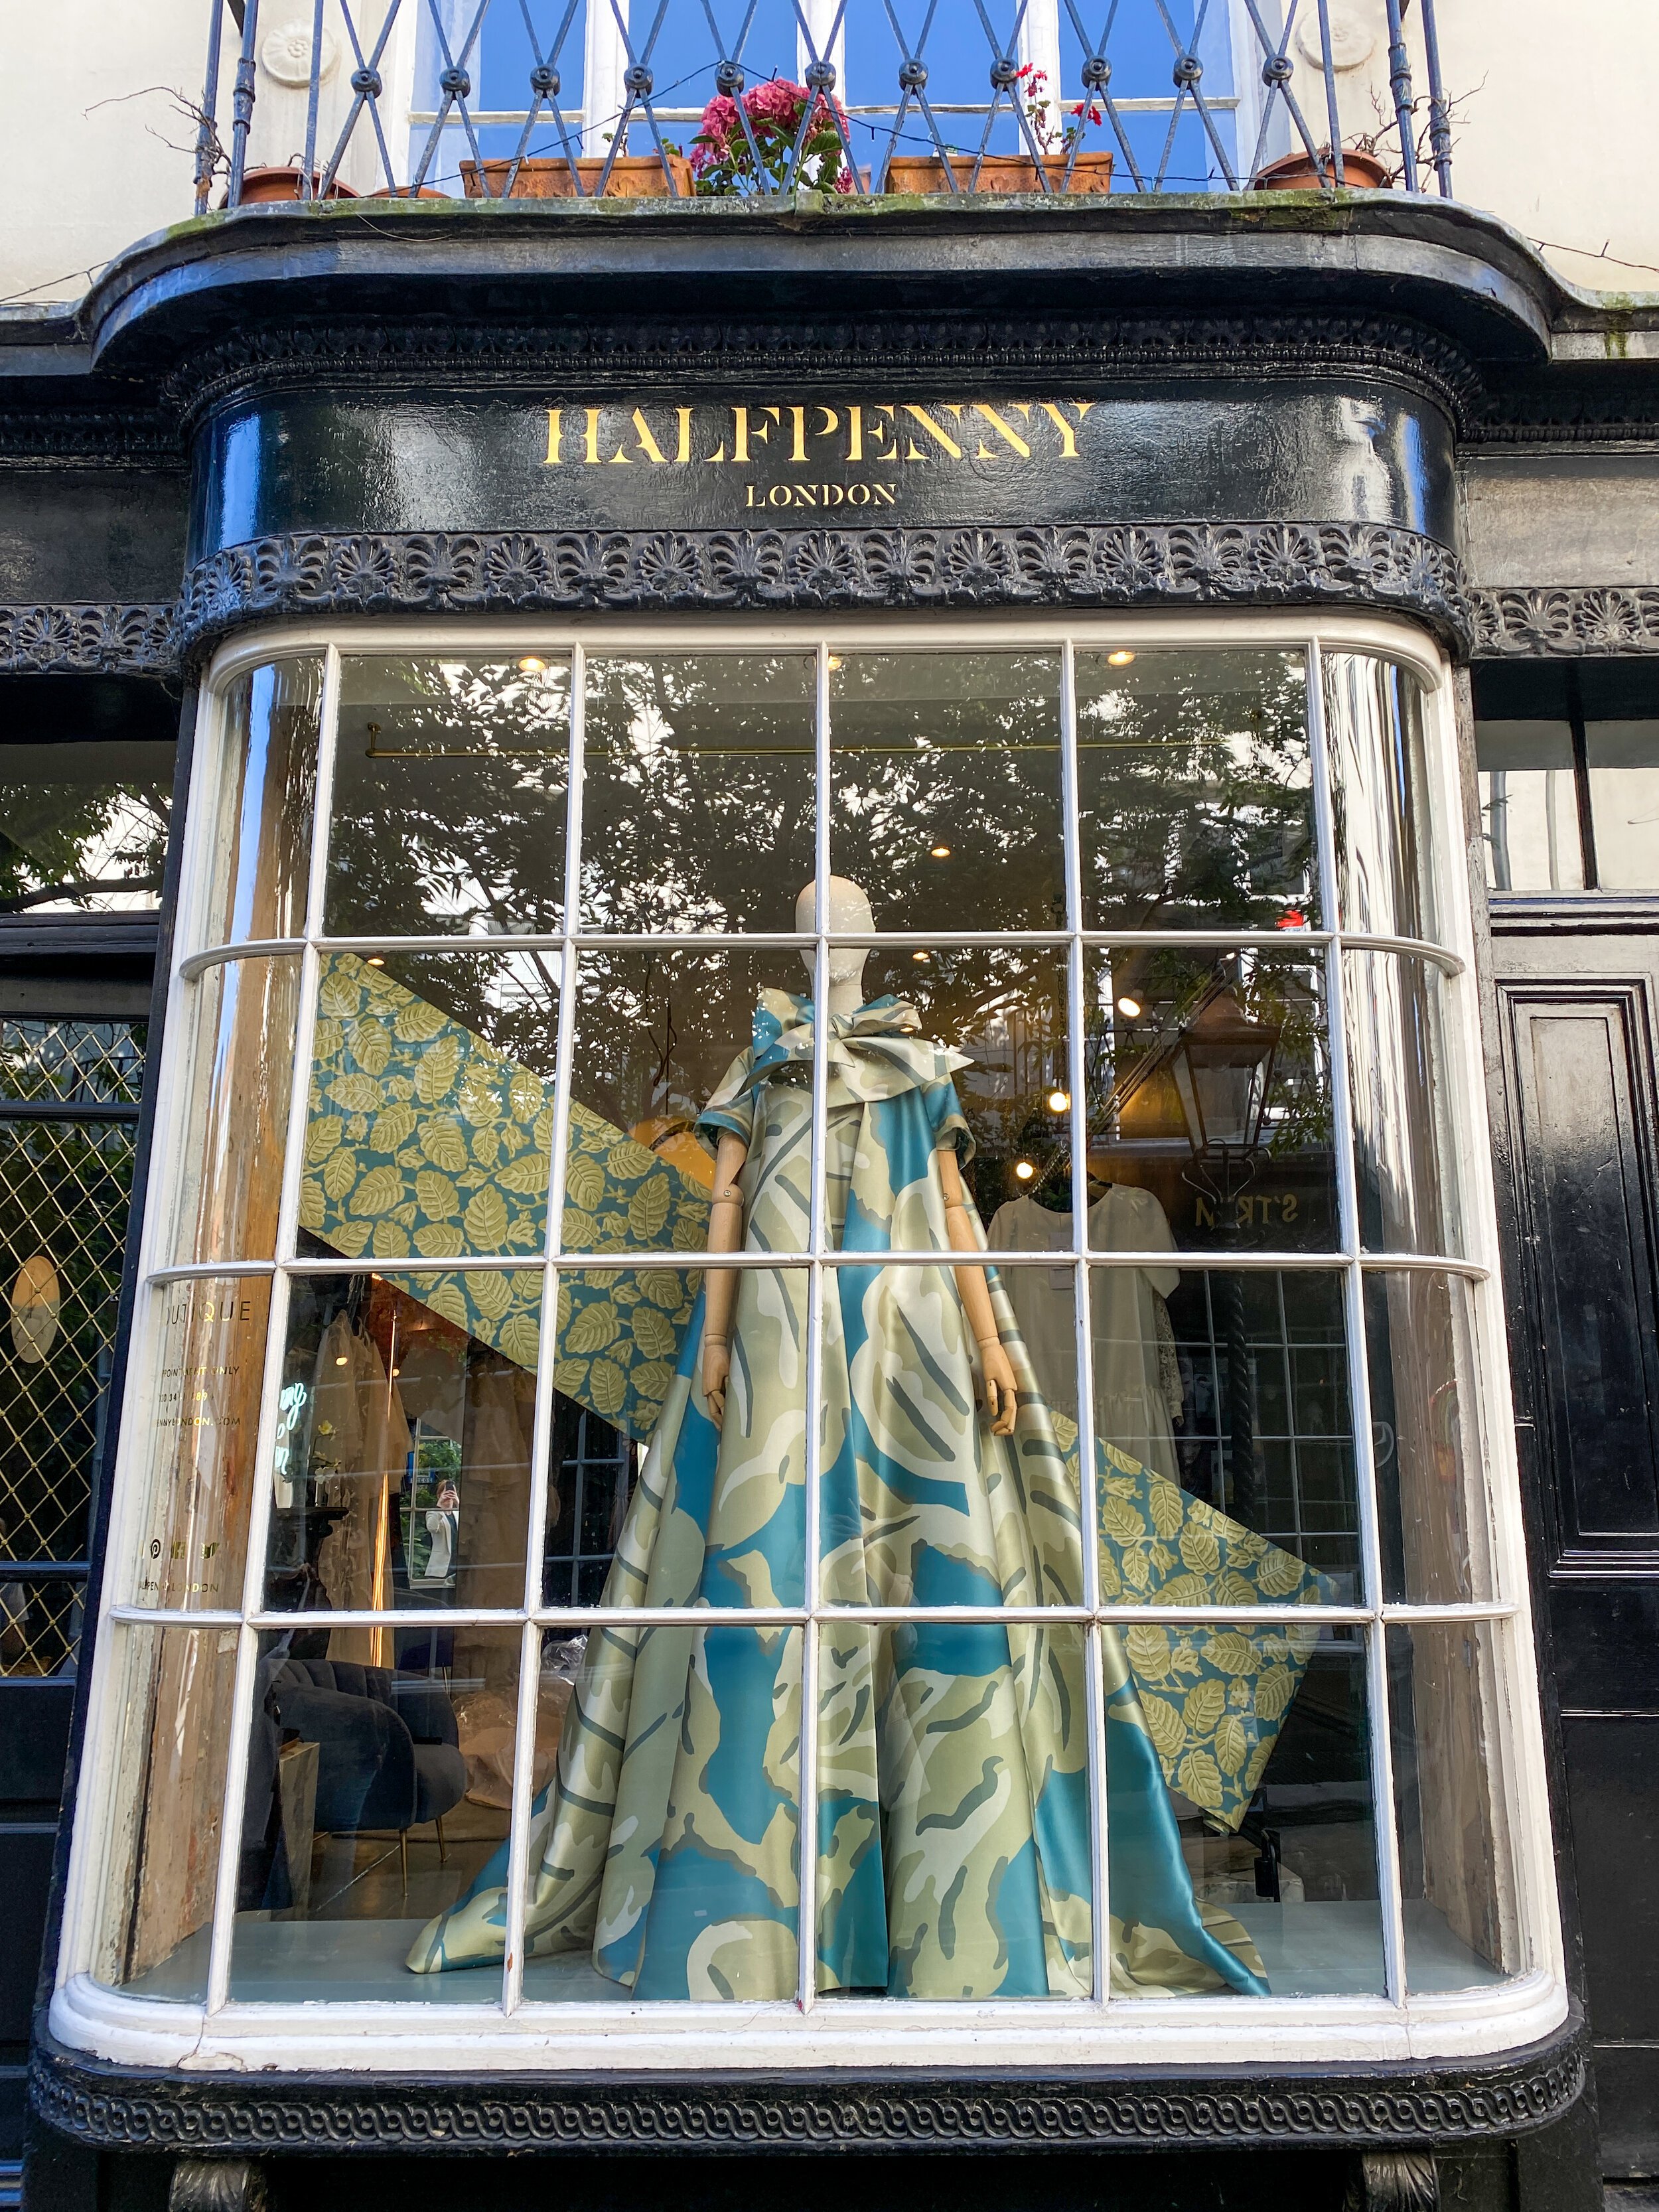 Halfpenny London created gowns using Little Greene National Trust prints digitally printed onto wedding dresses